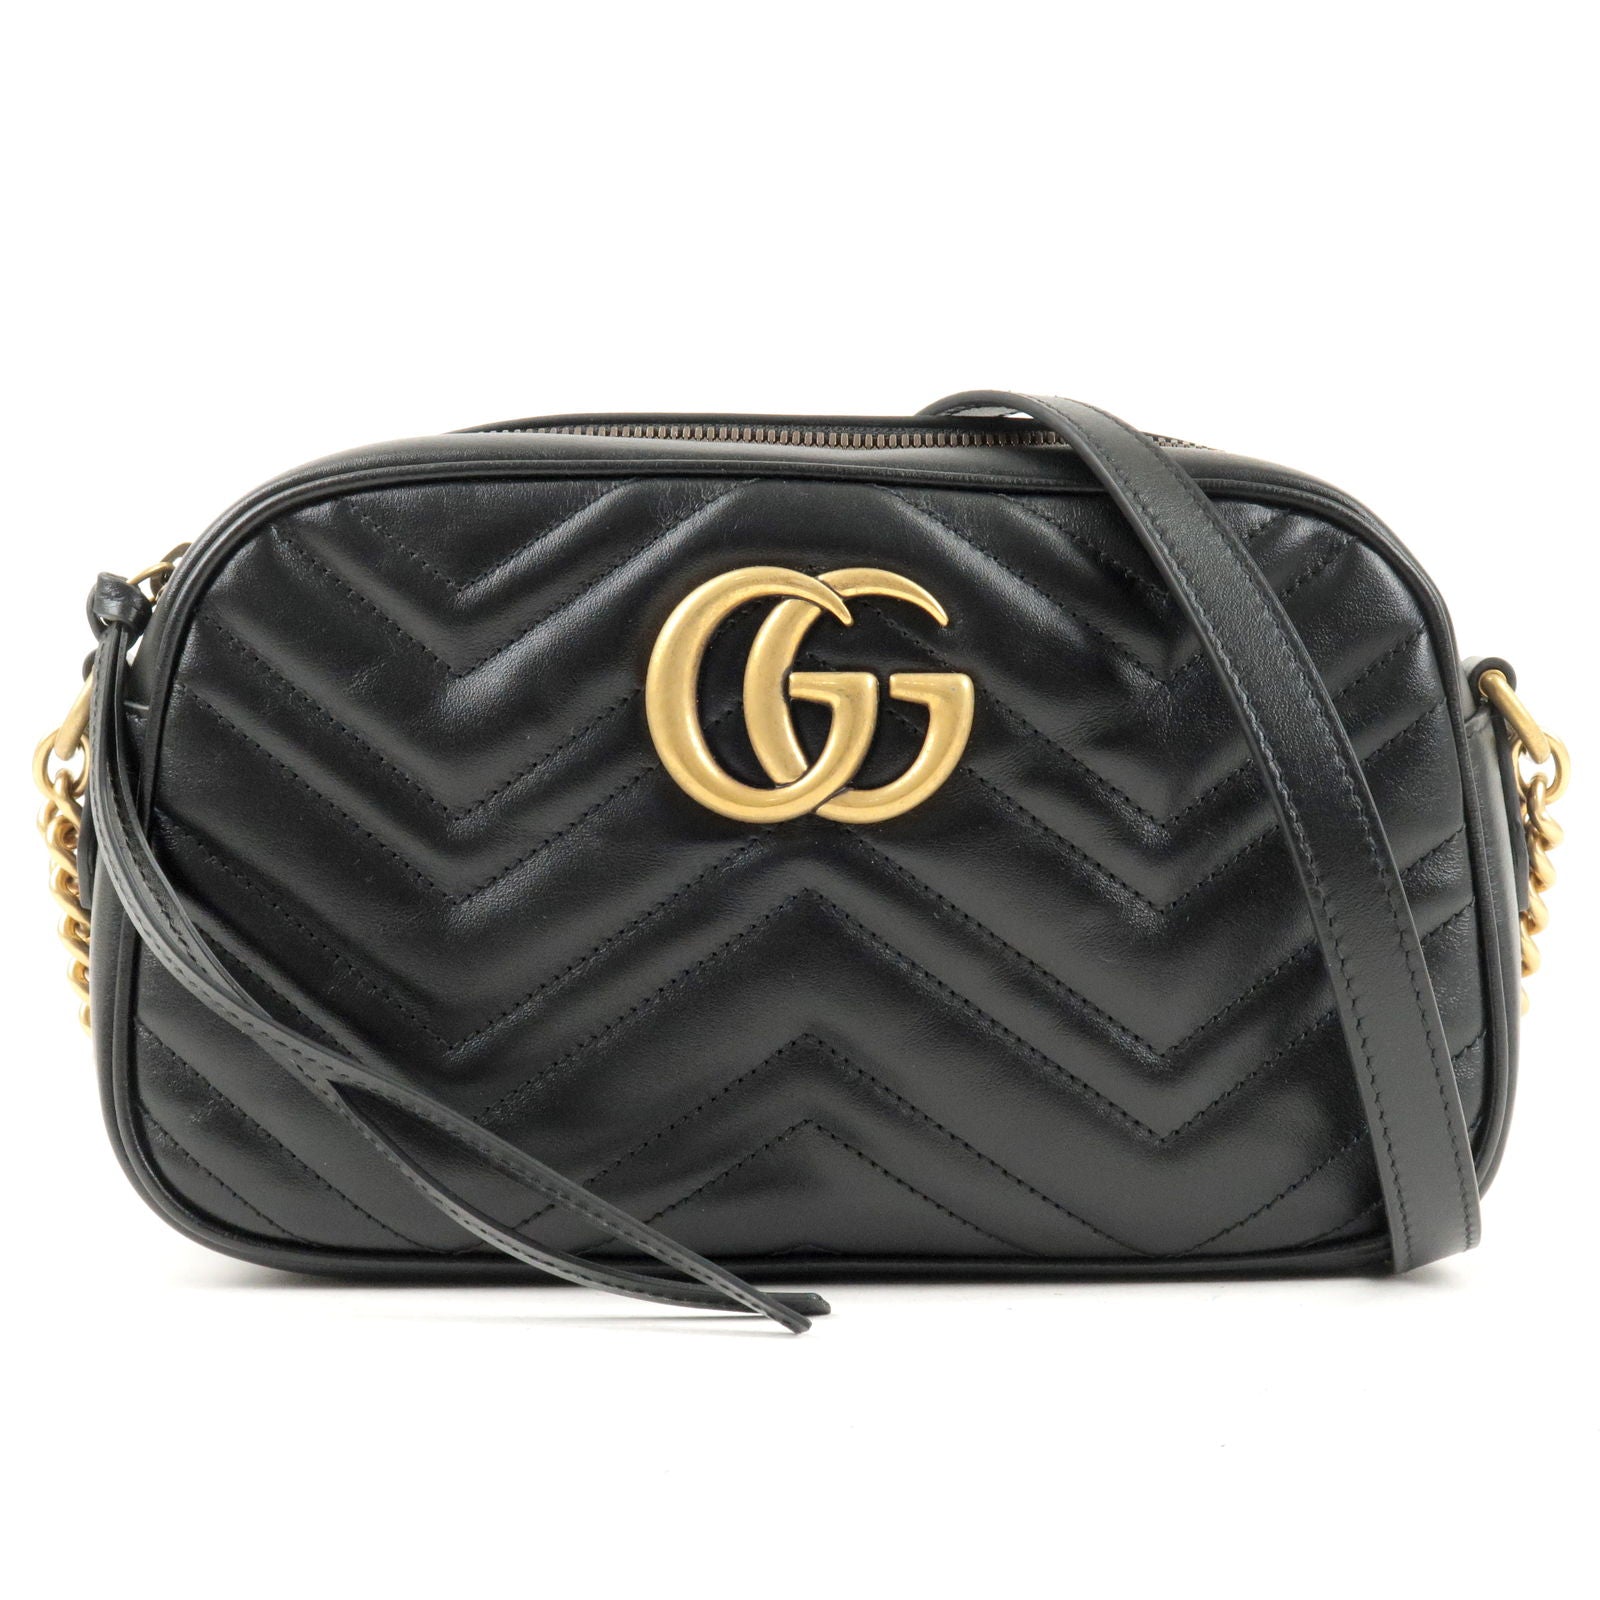 GUCCI-GG-Mermont-Leather-Chain-Shoulder-Bag-Black-447632